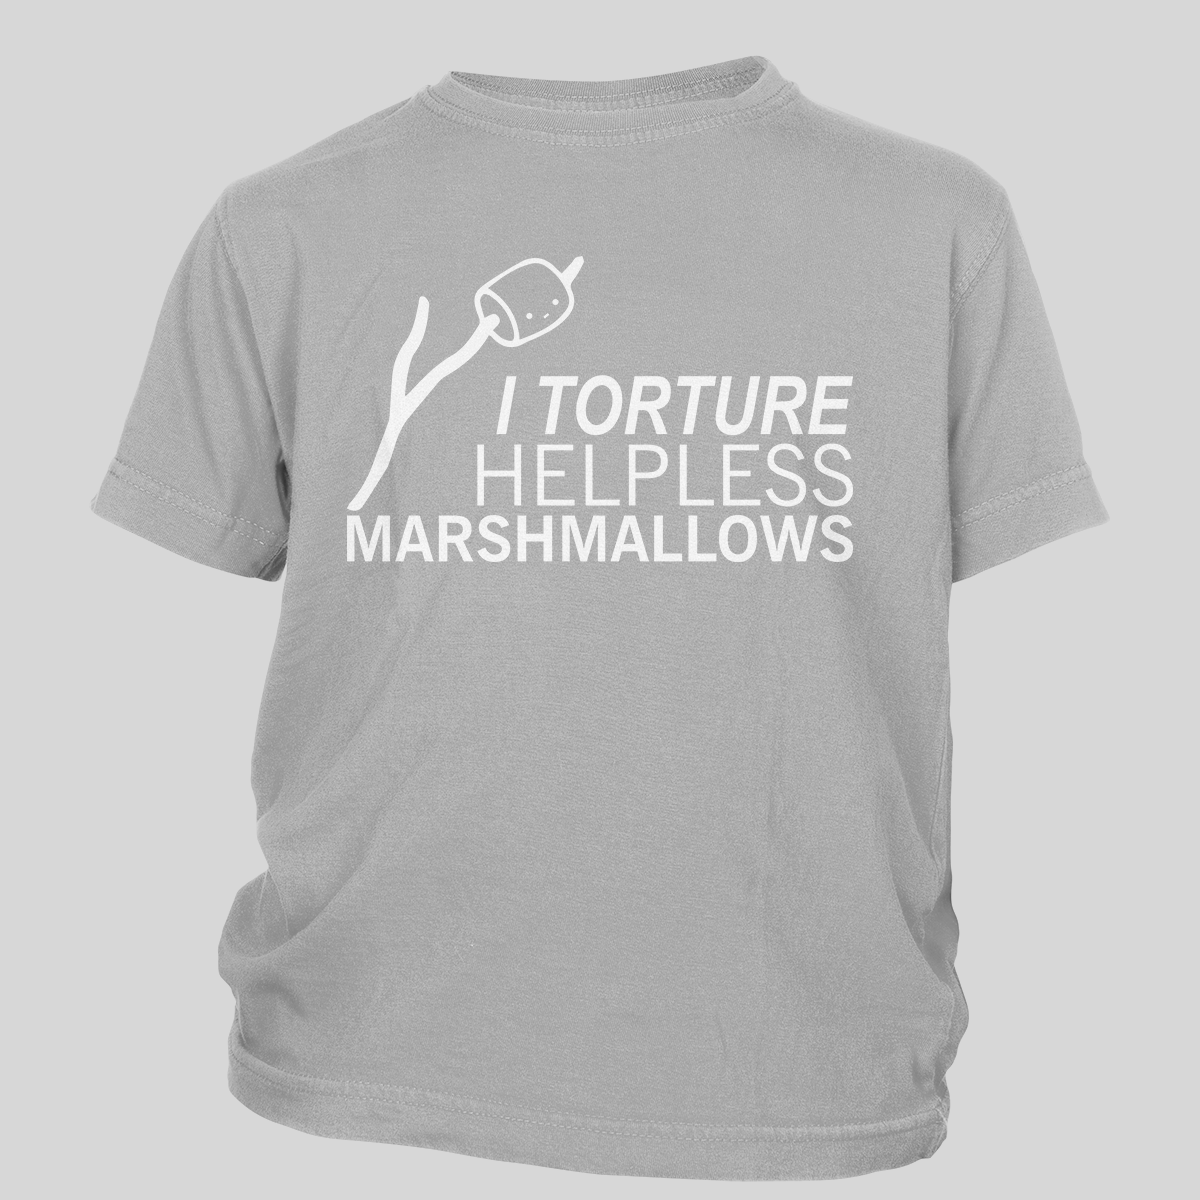 I Torture Helpless Marshmallows